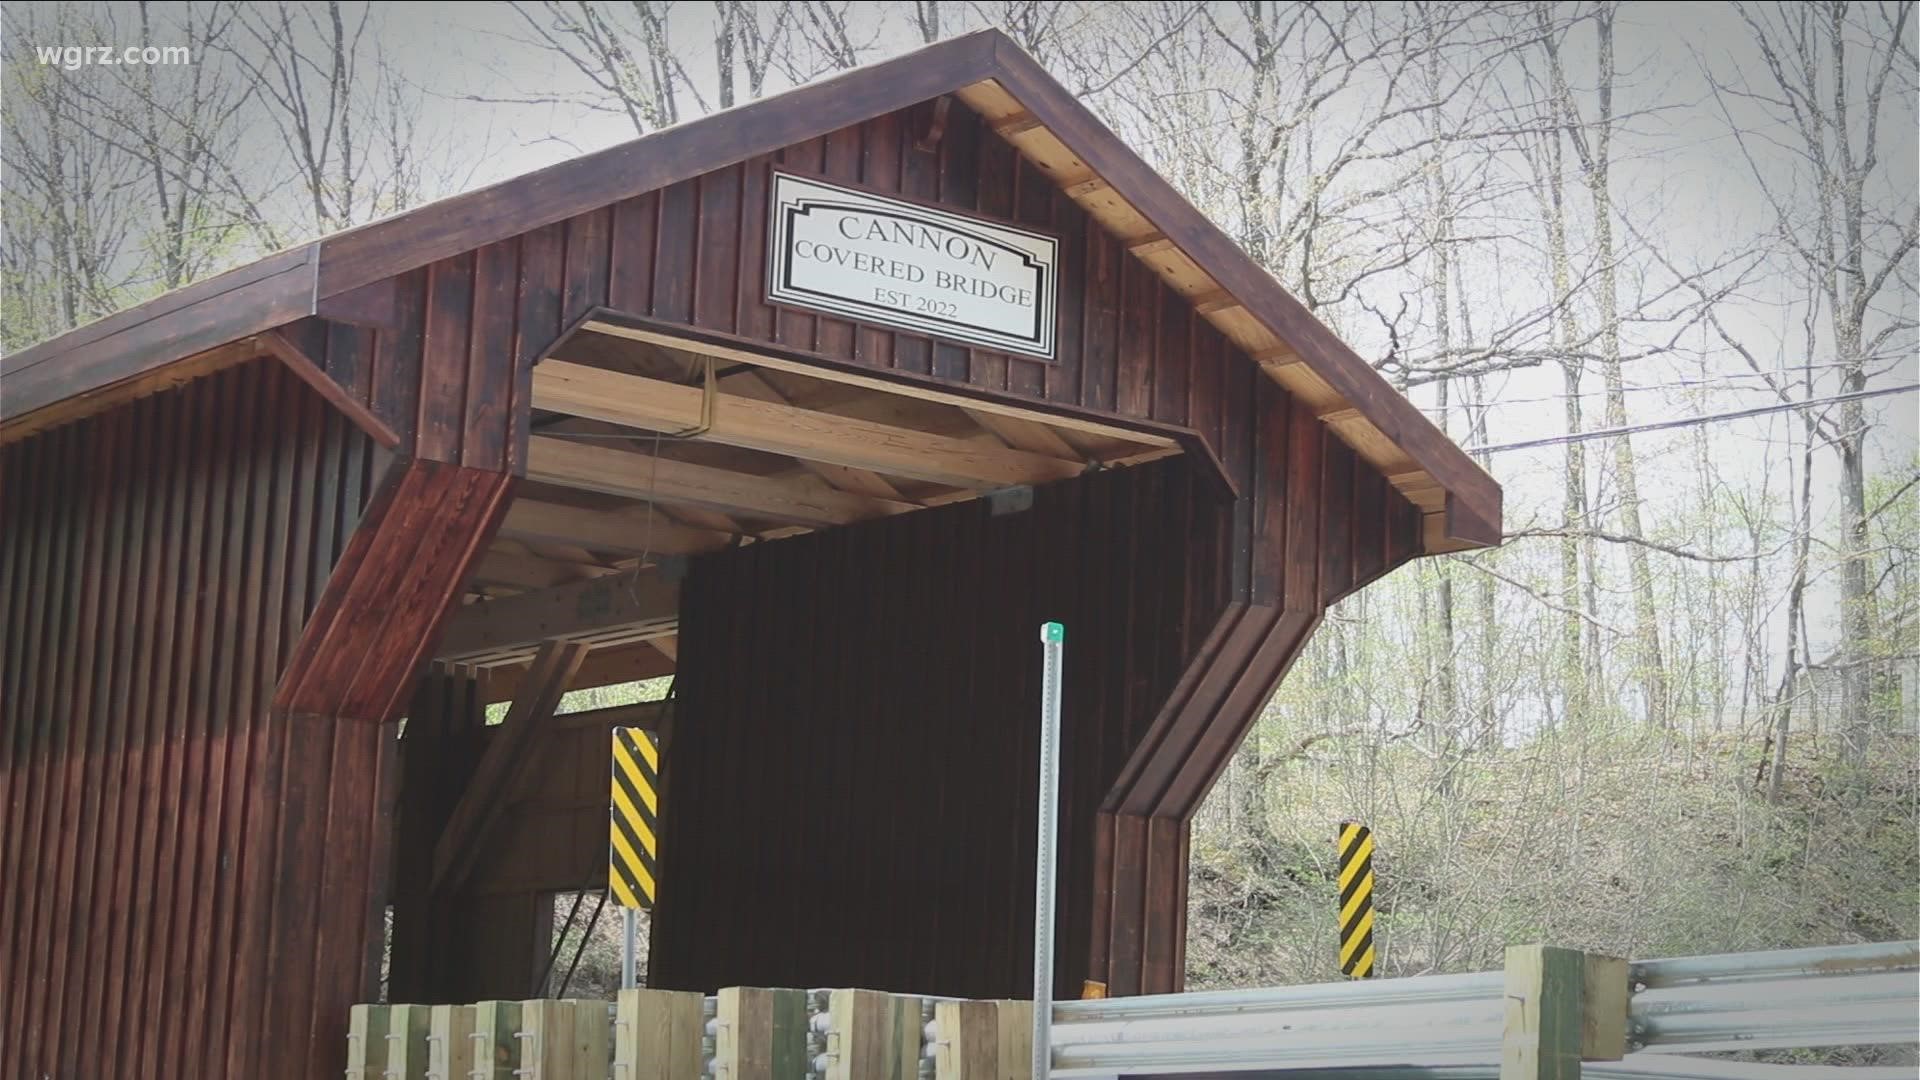 Cowlesville wooden bridge honors WW2 veteran